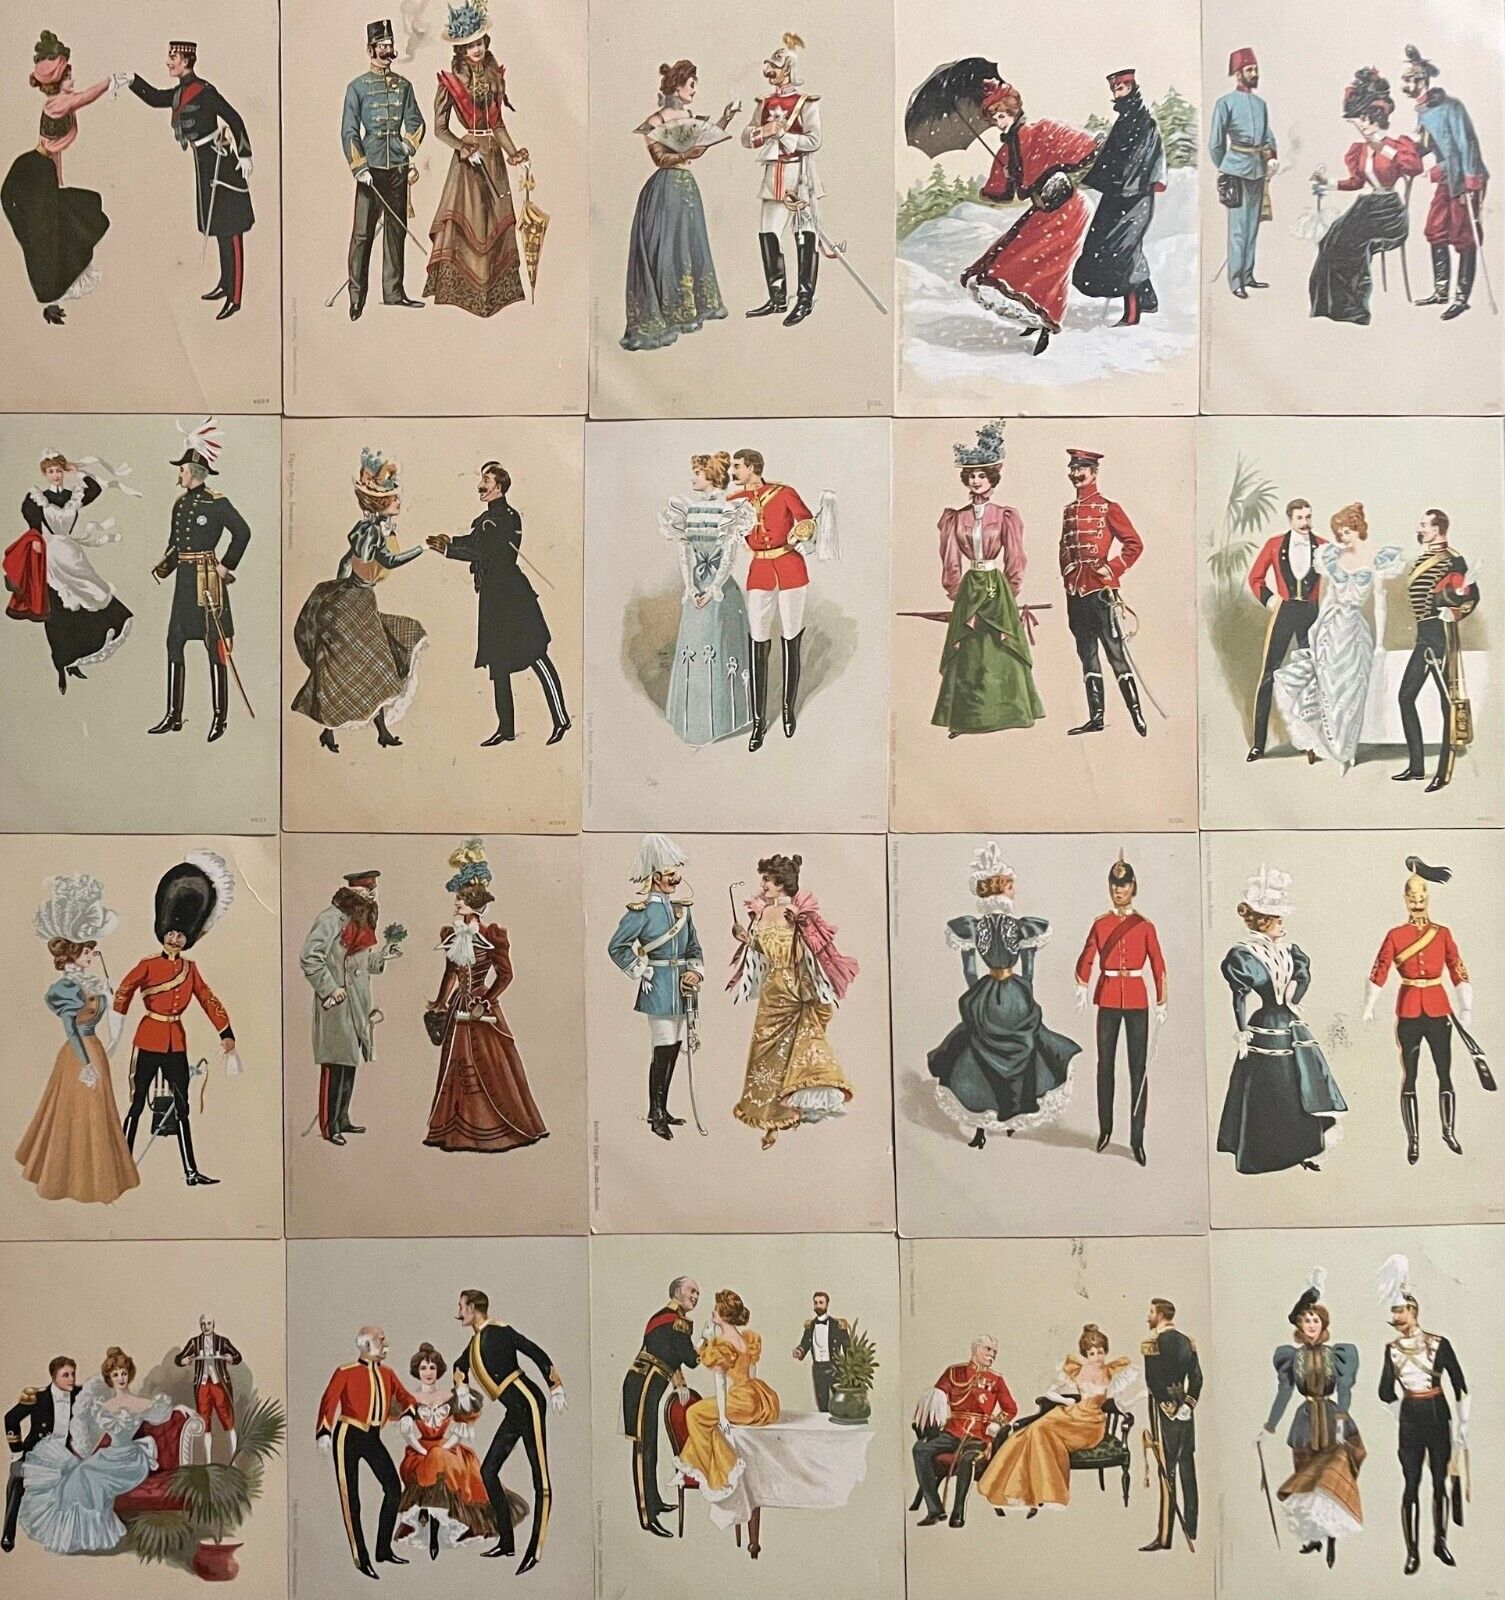 Drawn women and military gentlemen couples Edgar Schmidt 1900 chromos postcards